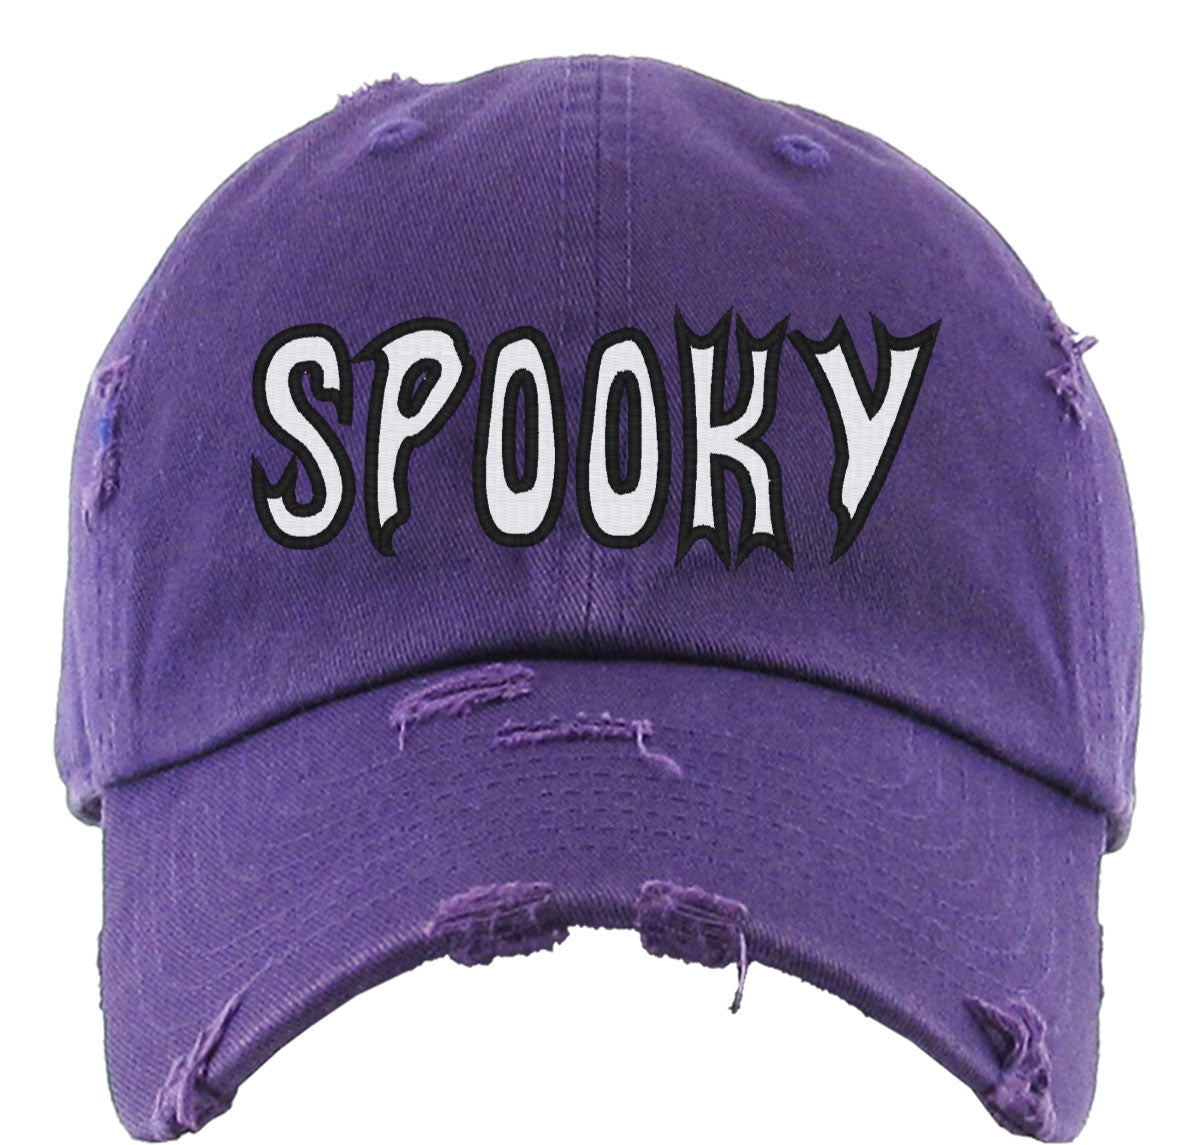 Spooky Vintage Baseball Cap